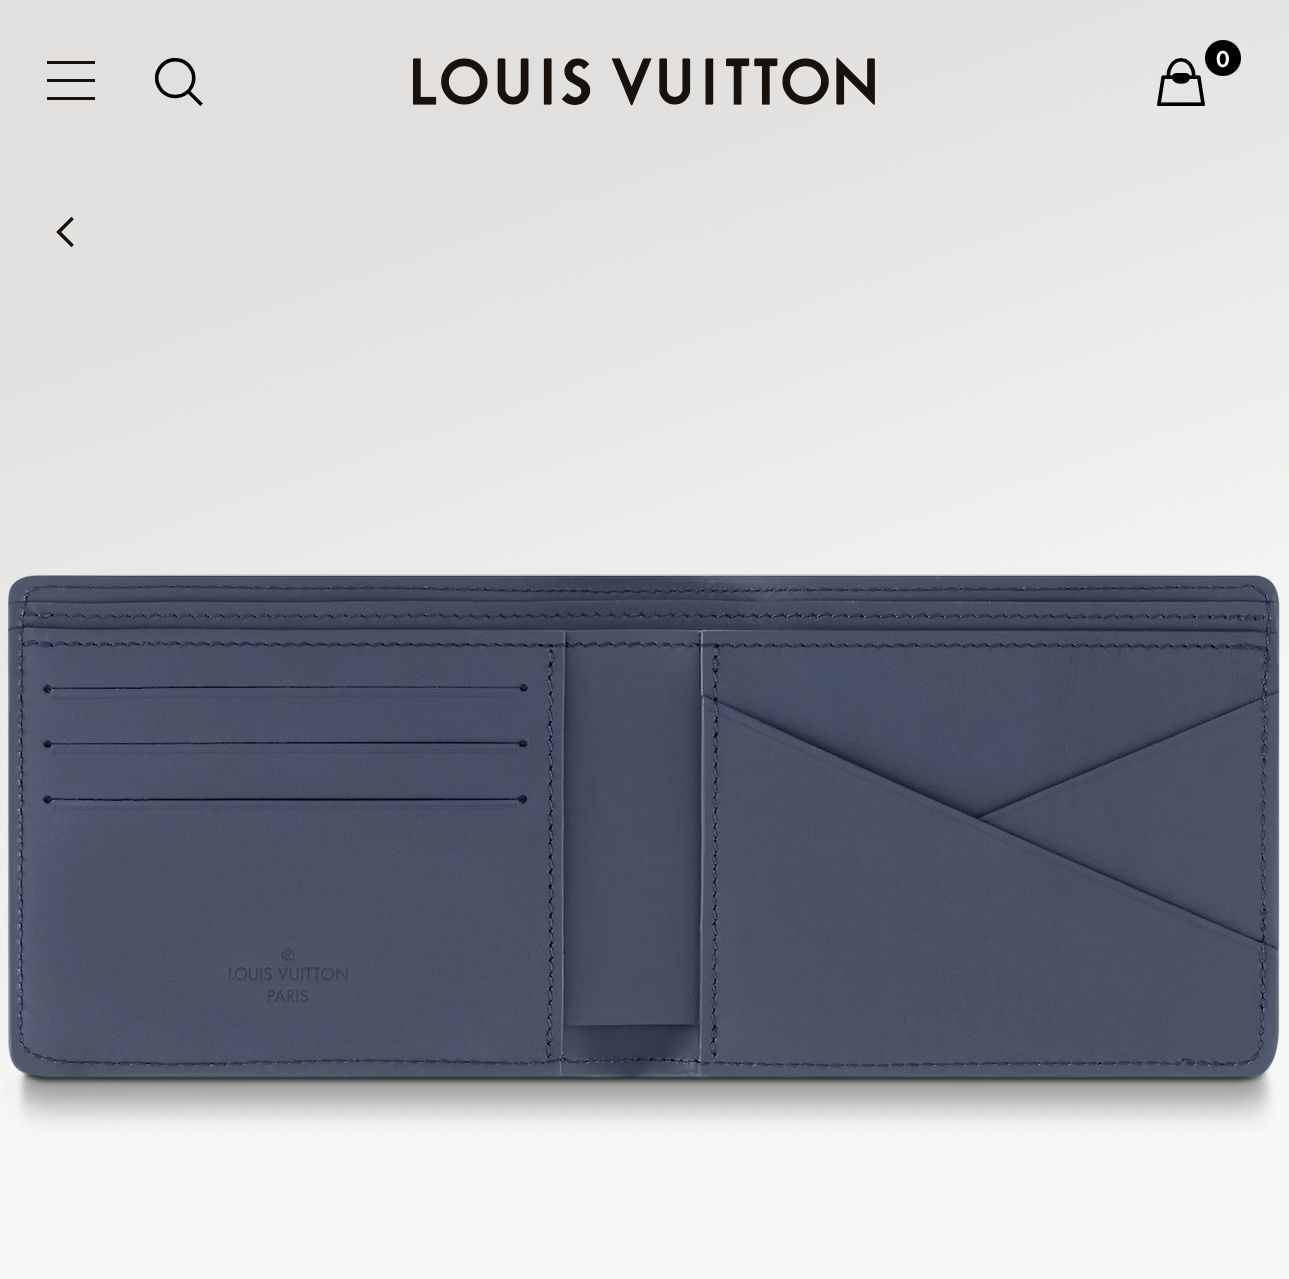 Louis Vuitton Multiple Wallet Grey for Sale in Miami Beach, FL